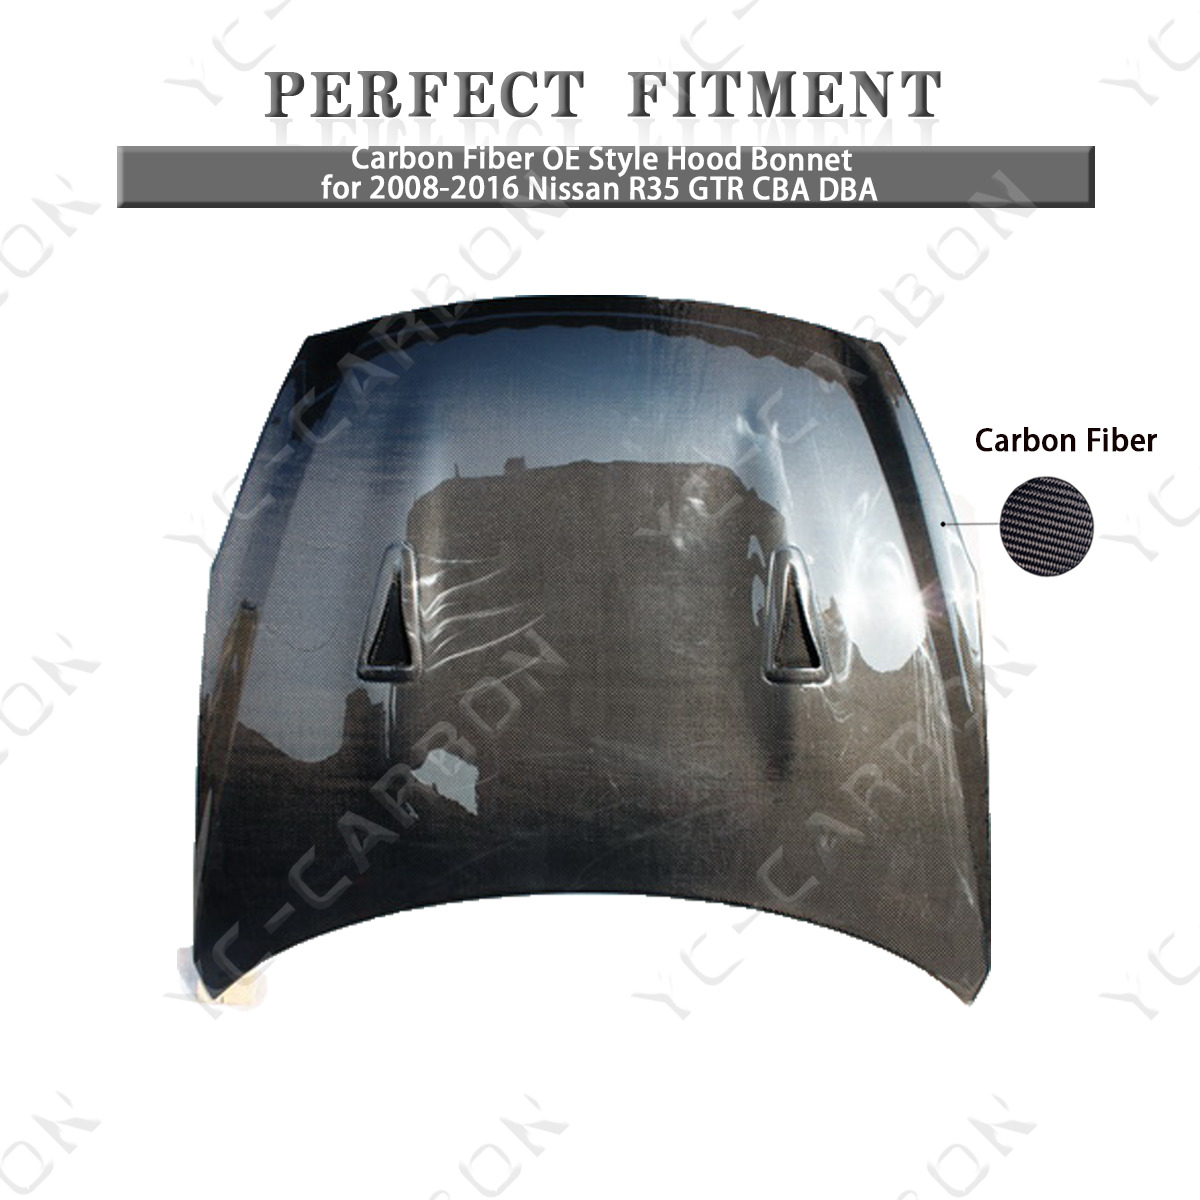 New Carbon Fiber OE Style Hood Bonnet for 2008-2016 Nissan R35 GTR CBA DBA